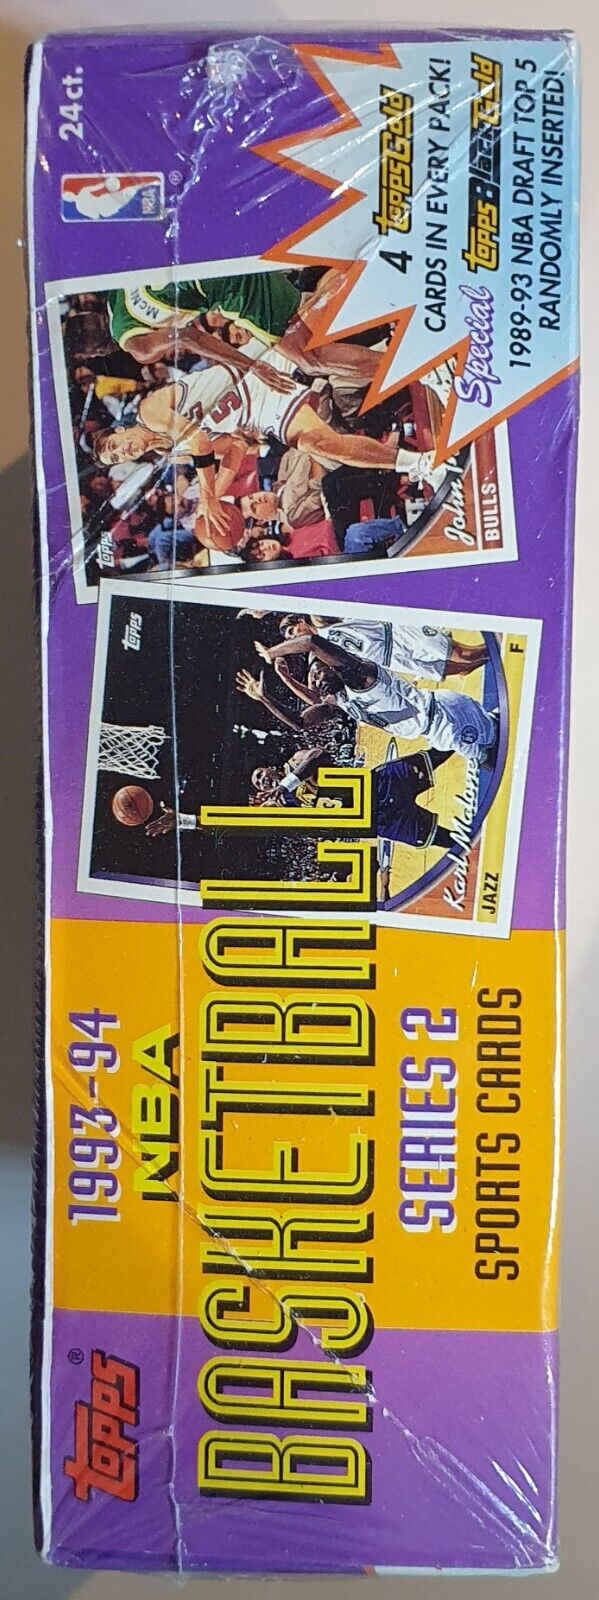 1993-94 Topps NBA Basketball Series 2 Box Jumbo Packs - Factory Sealed